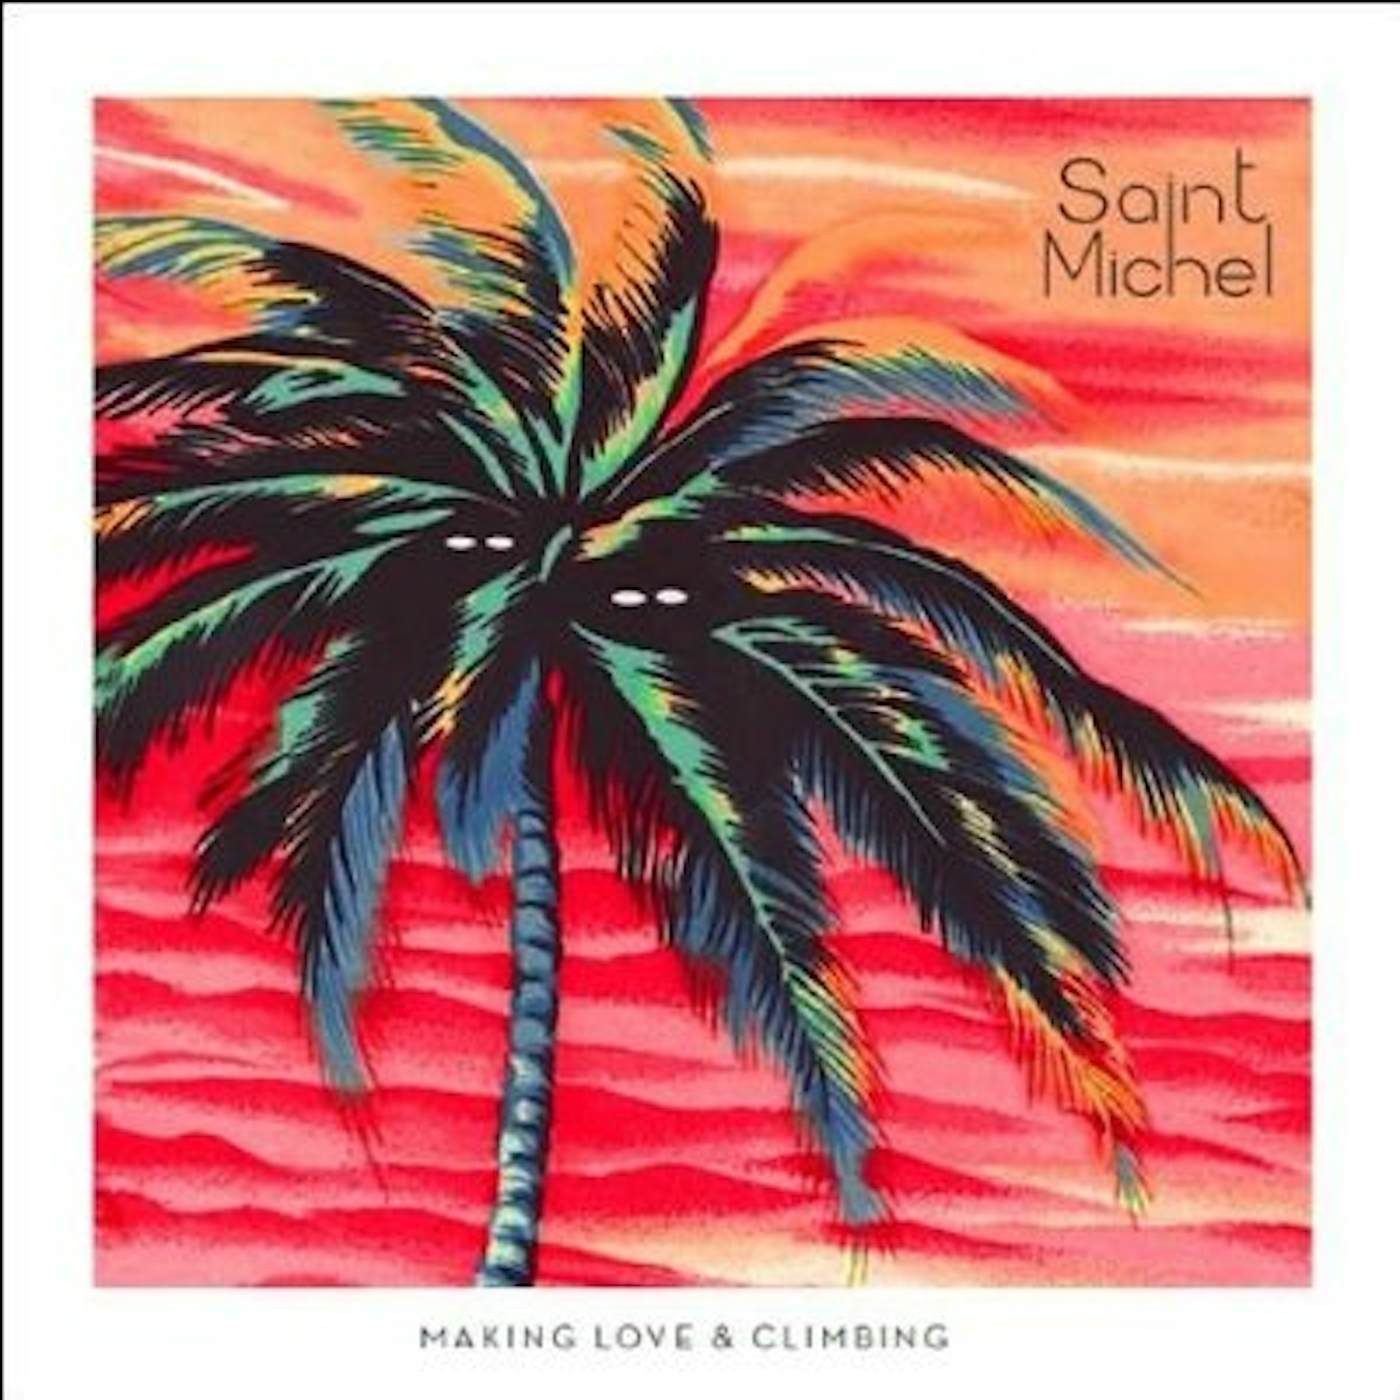 Saint Michel MAKING LOVE & CLIMBING CD